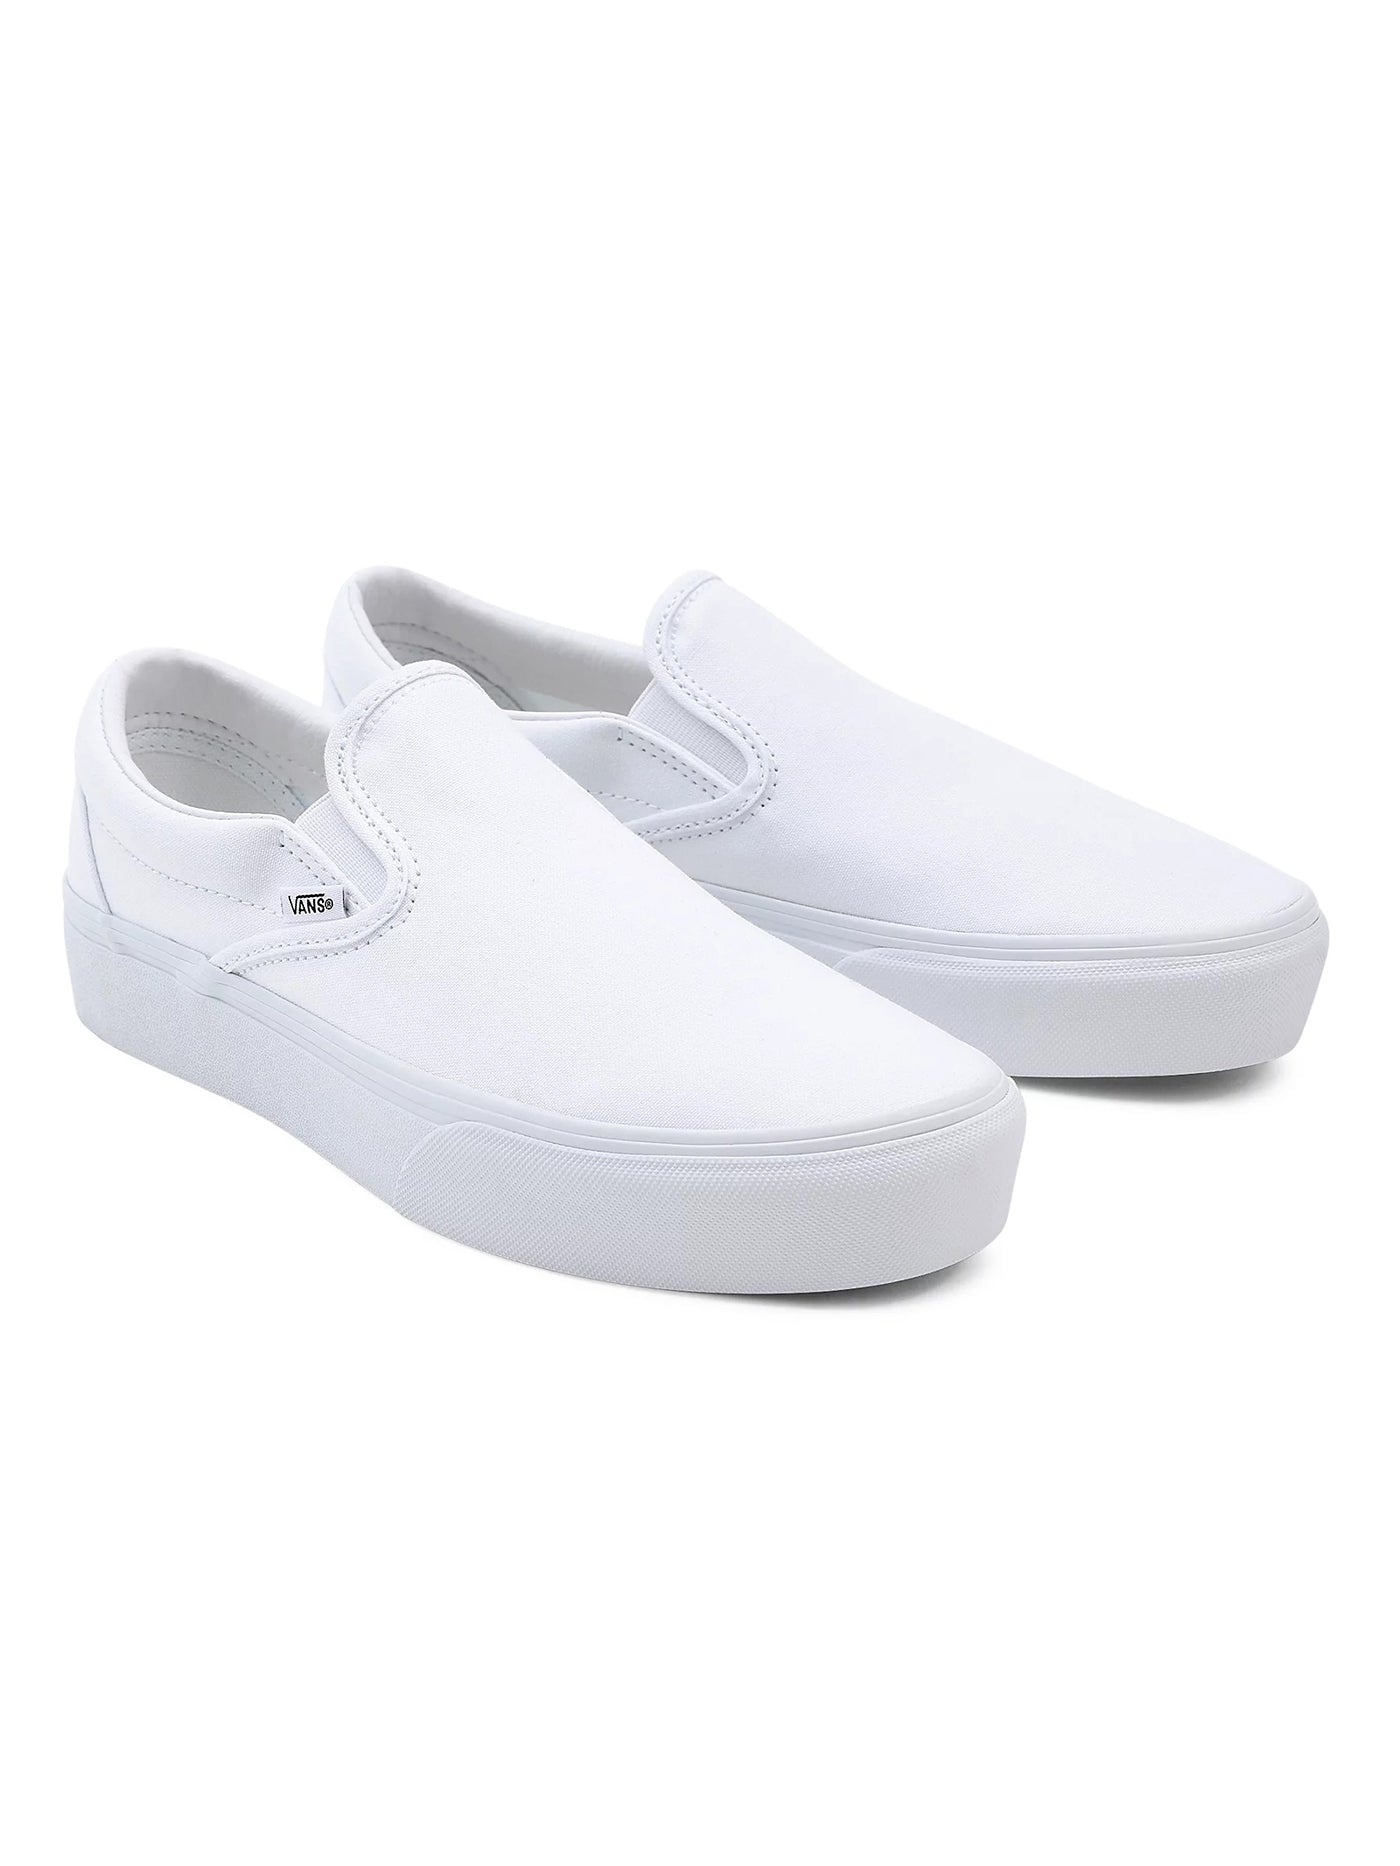 Vans Classic Slip-On Platform True White Shoes